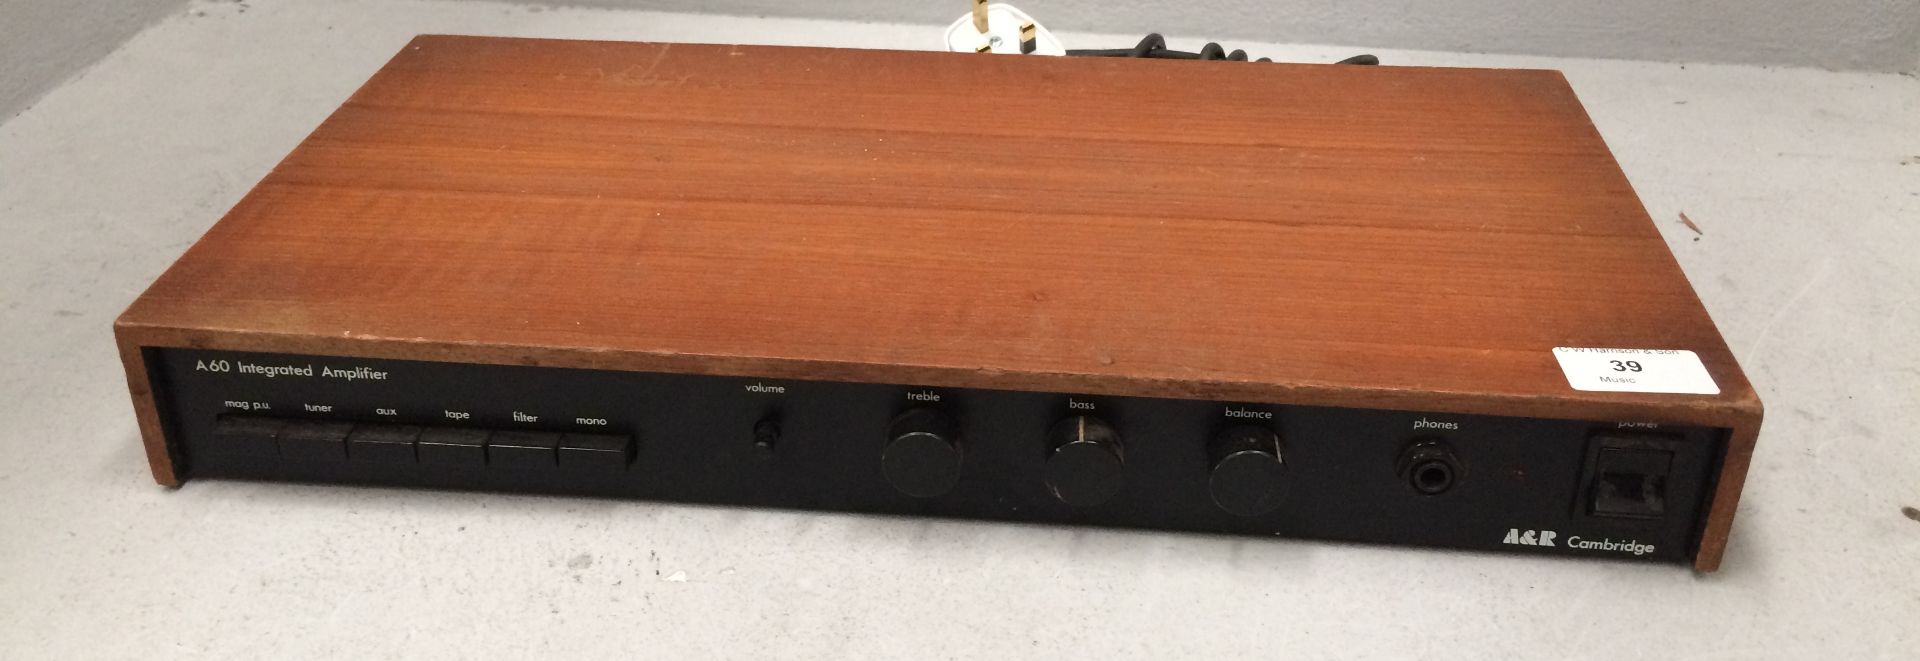 A2R Cambridge A60 integrated amplifier